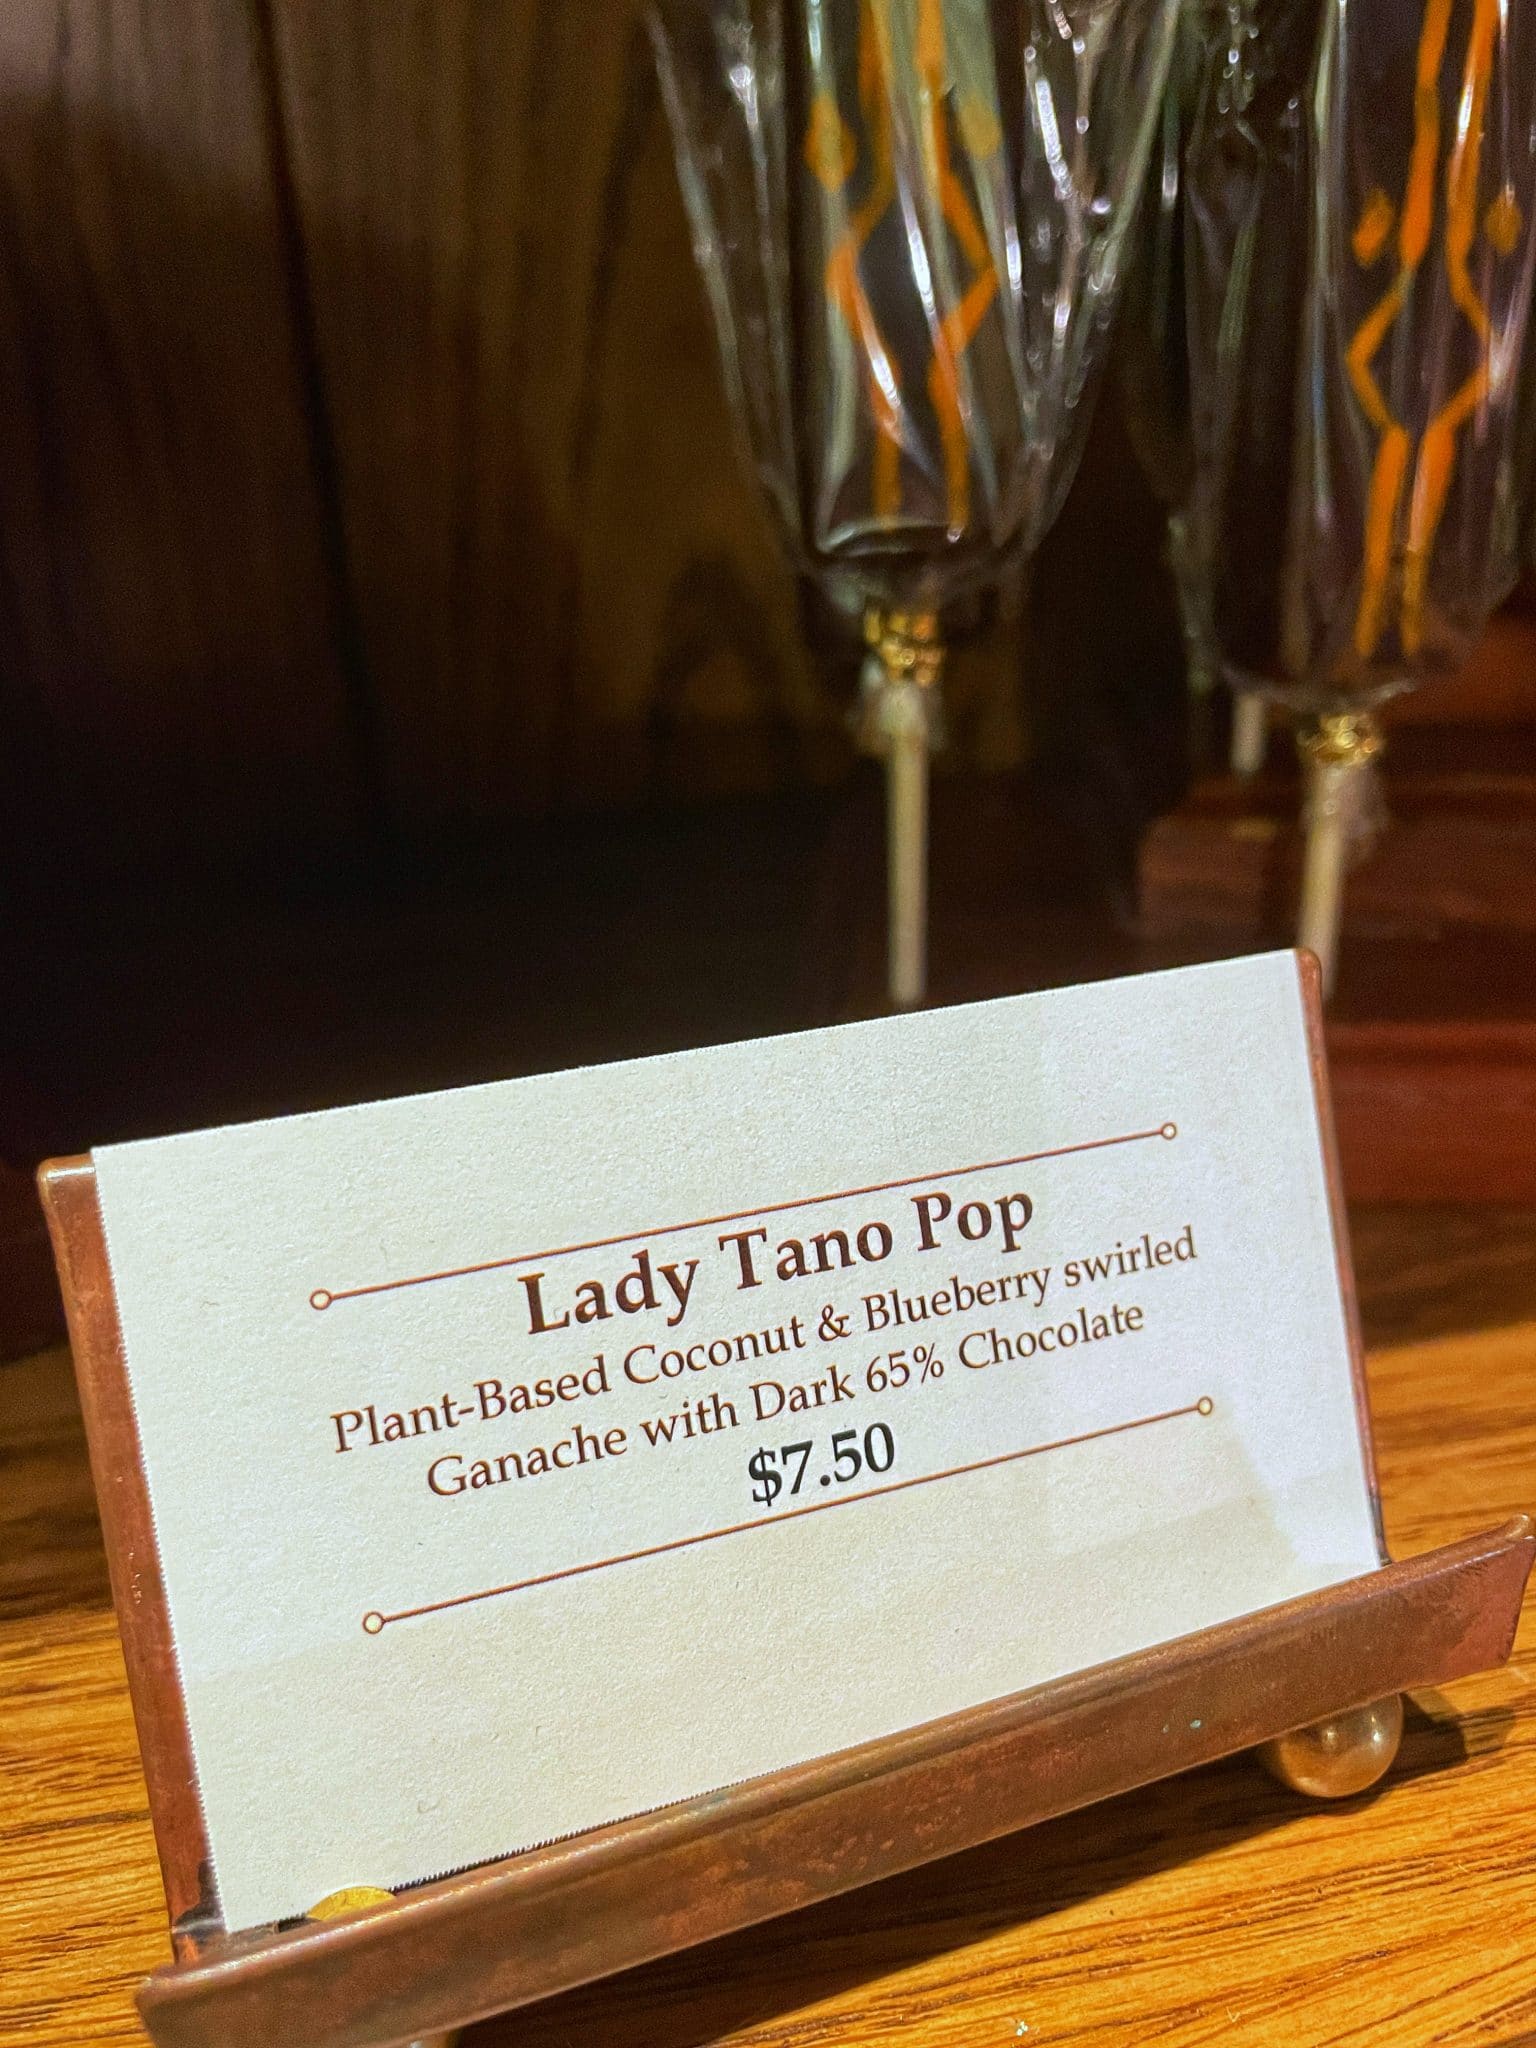 Lady Tano pop from the Ganachery